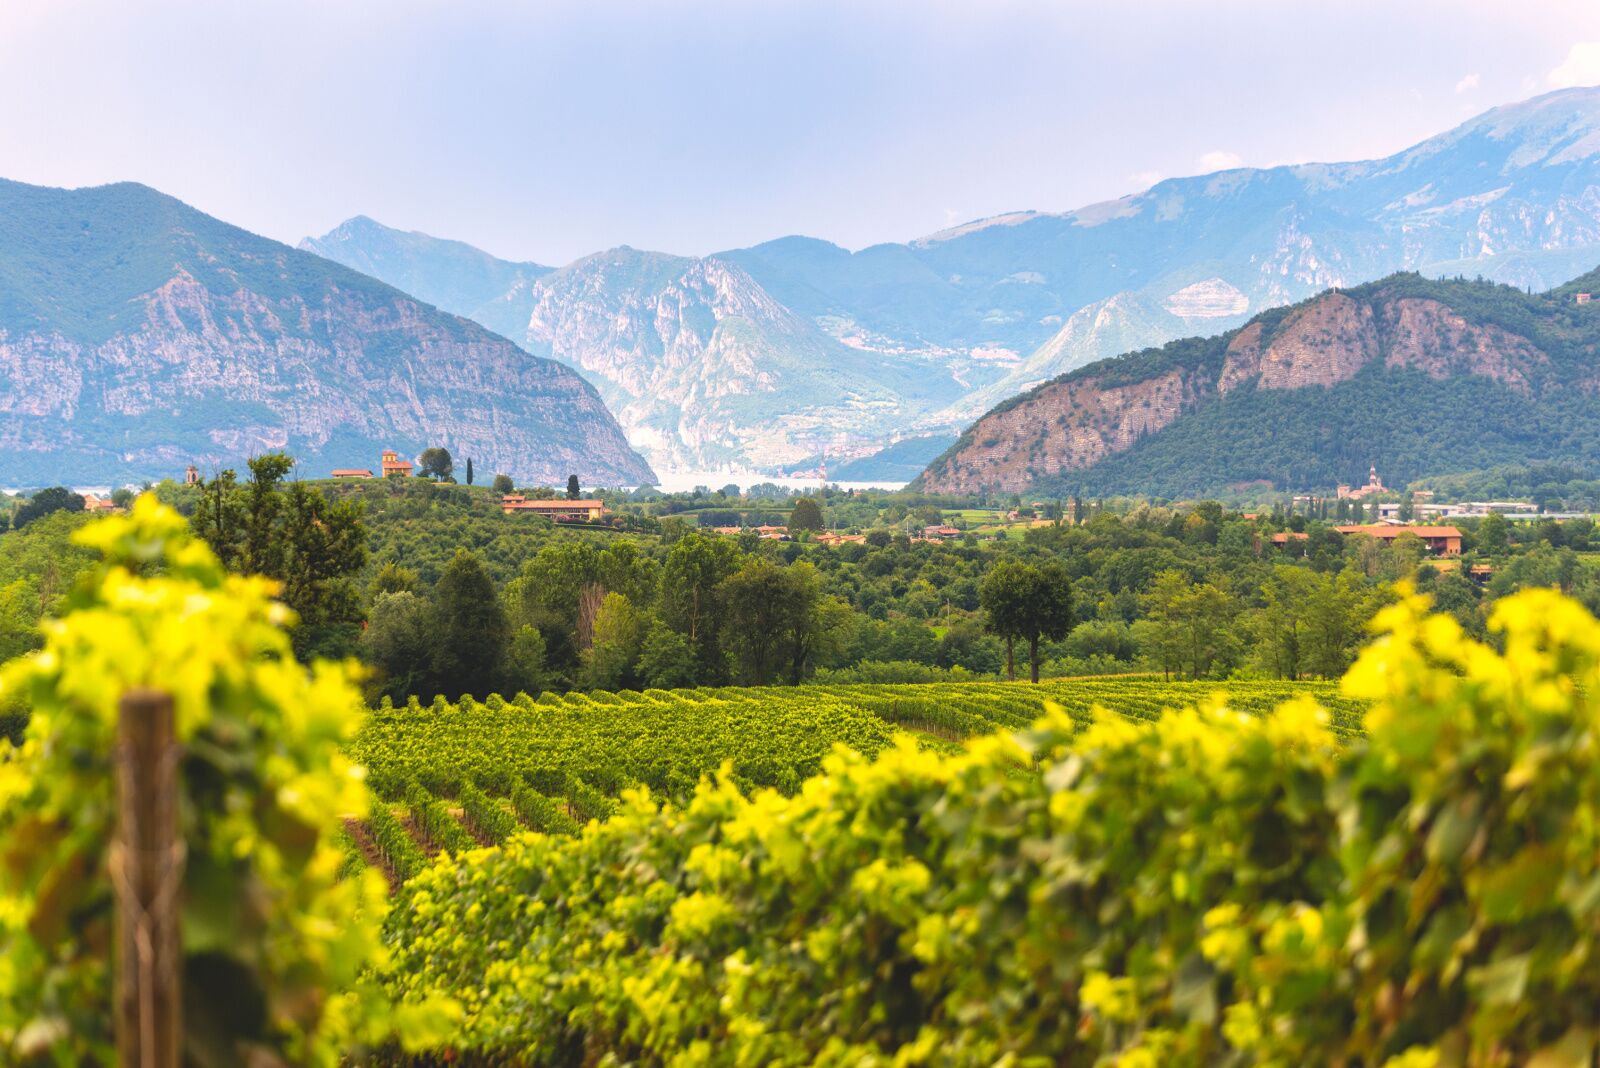 franciacorta wine region in northern italy